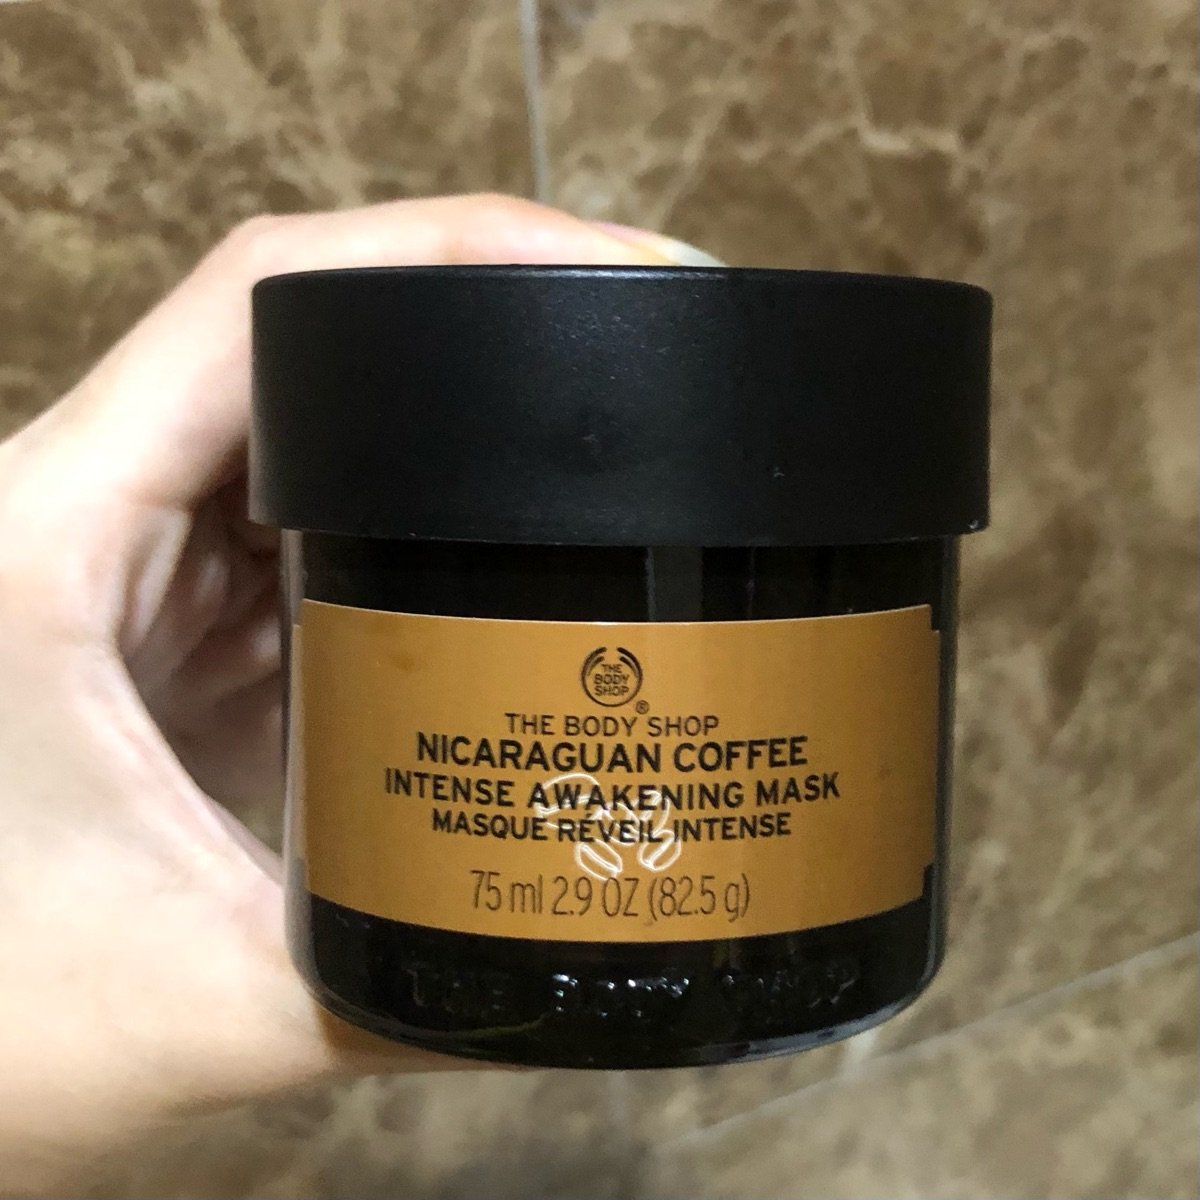 The Body Shop Nicaraguan Coffee Mask Reviews | abillion